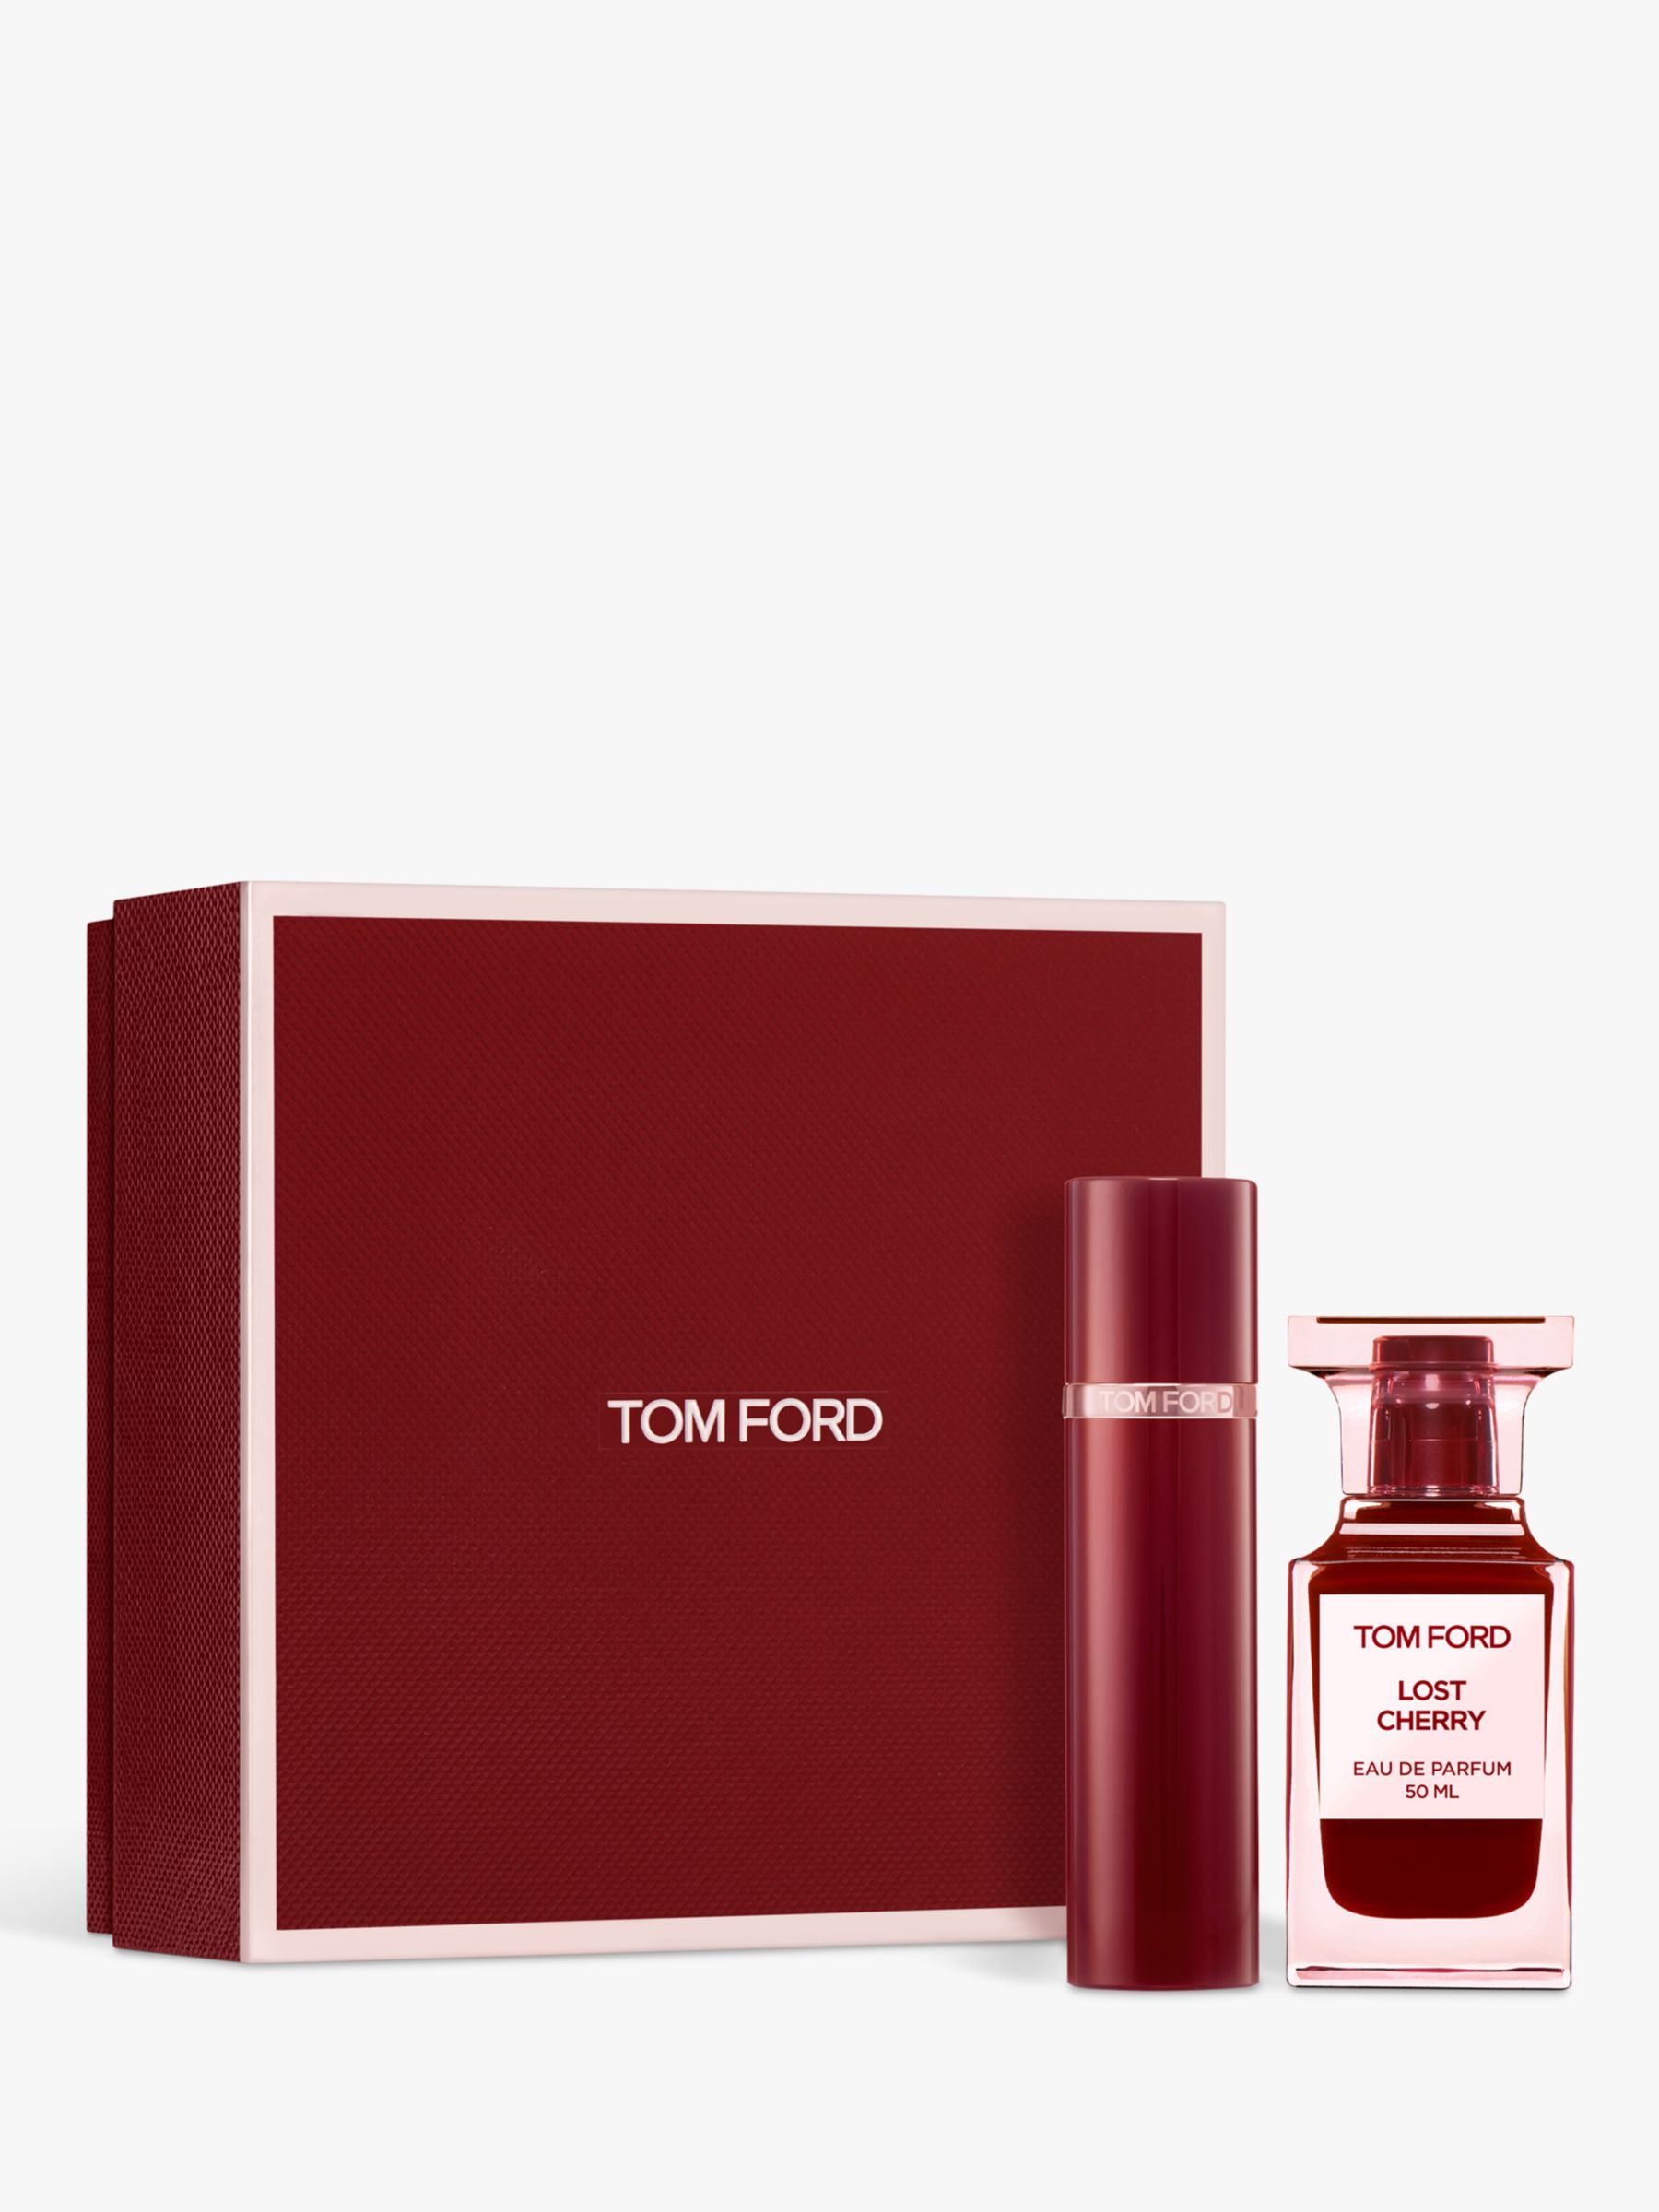 TOM FORD Private Blend Lost Cherry Eau de Parfum 50ml Fragrance Gift Set